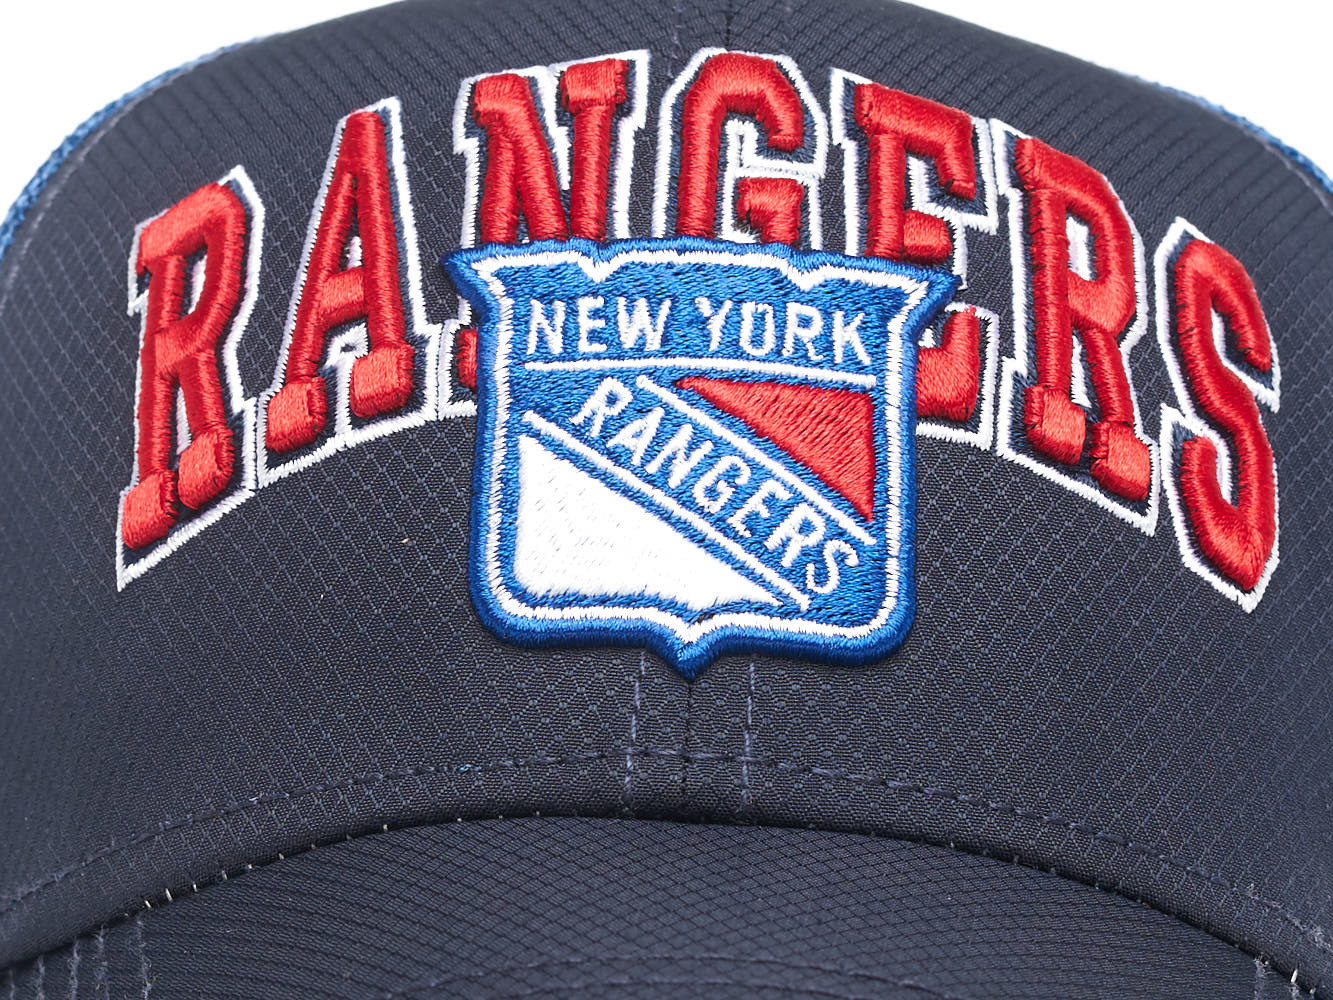  Atributika & club NHL New York Rangers 31163 SR